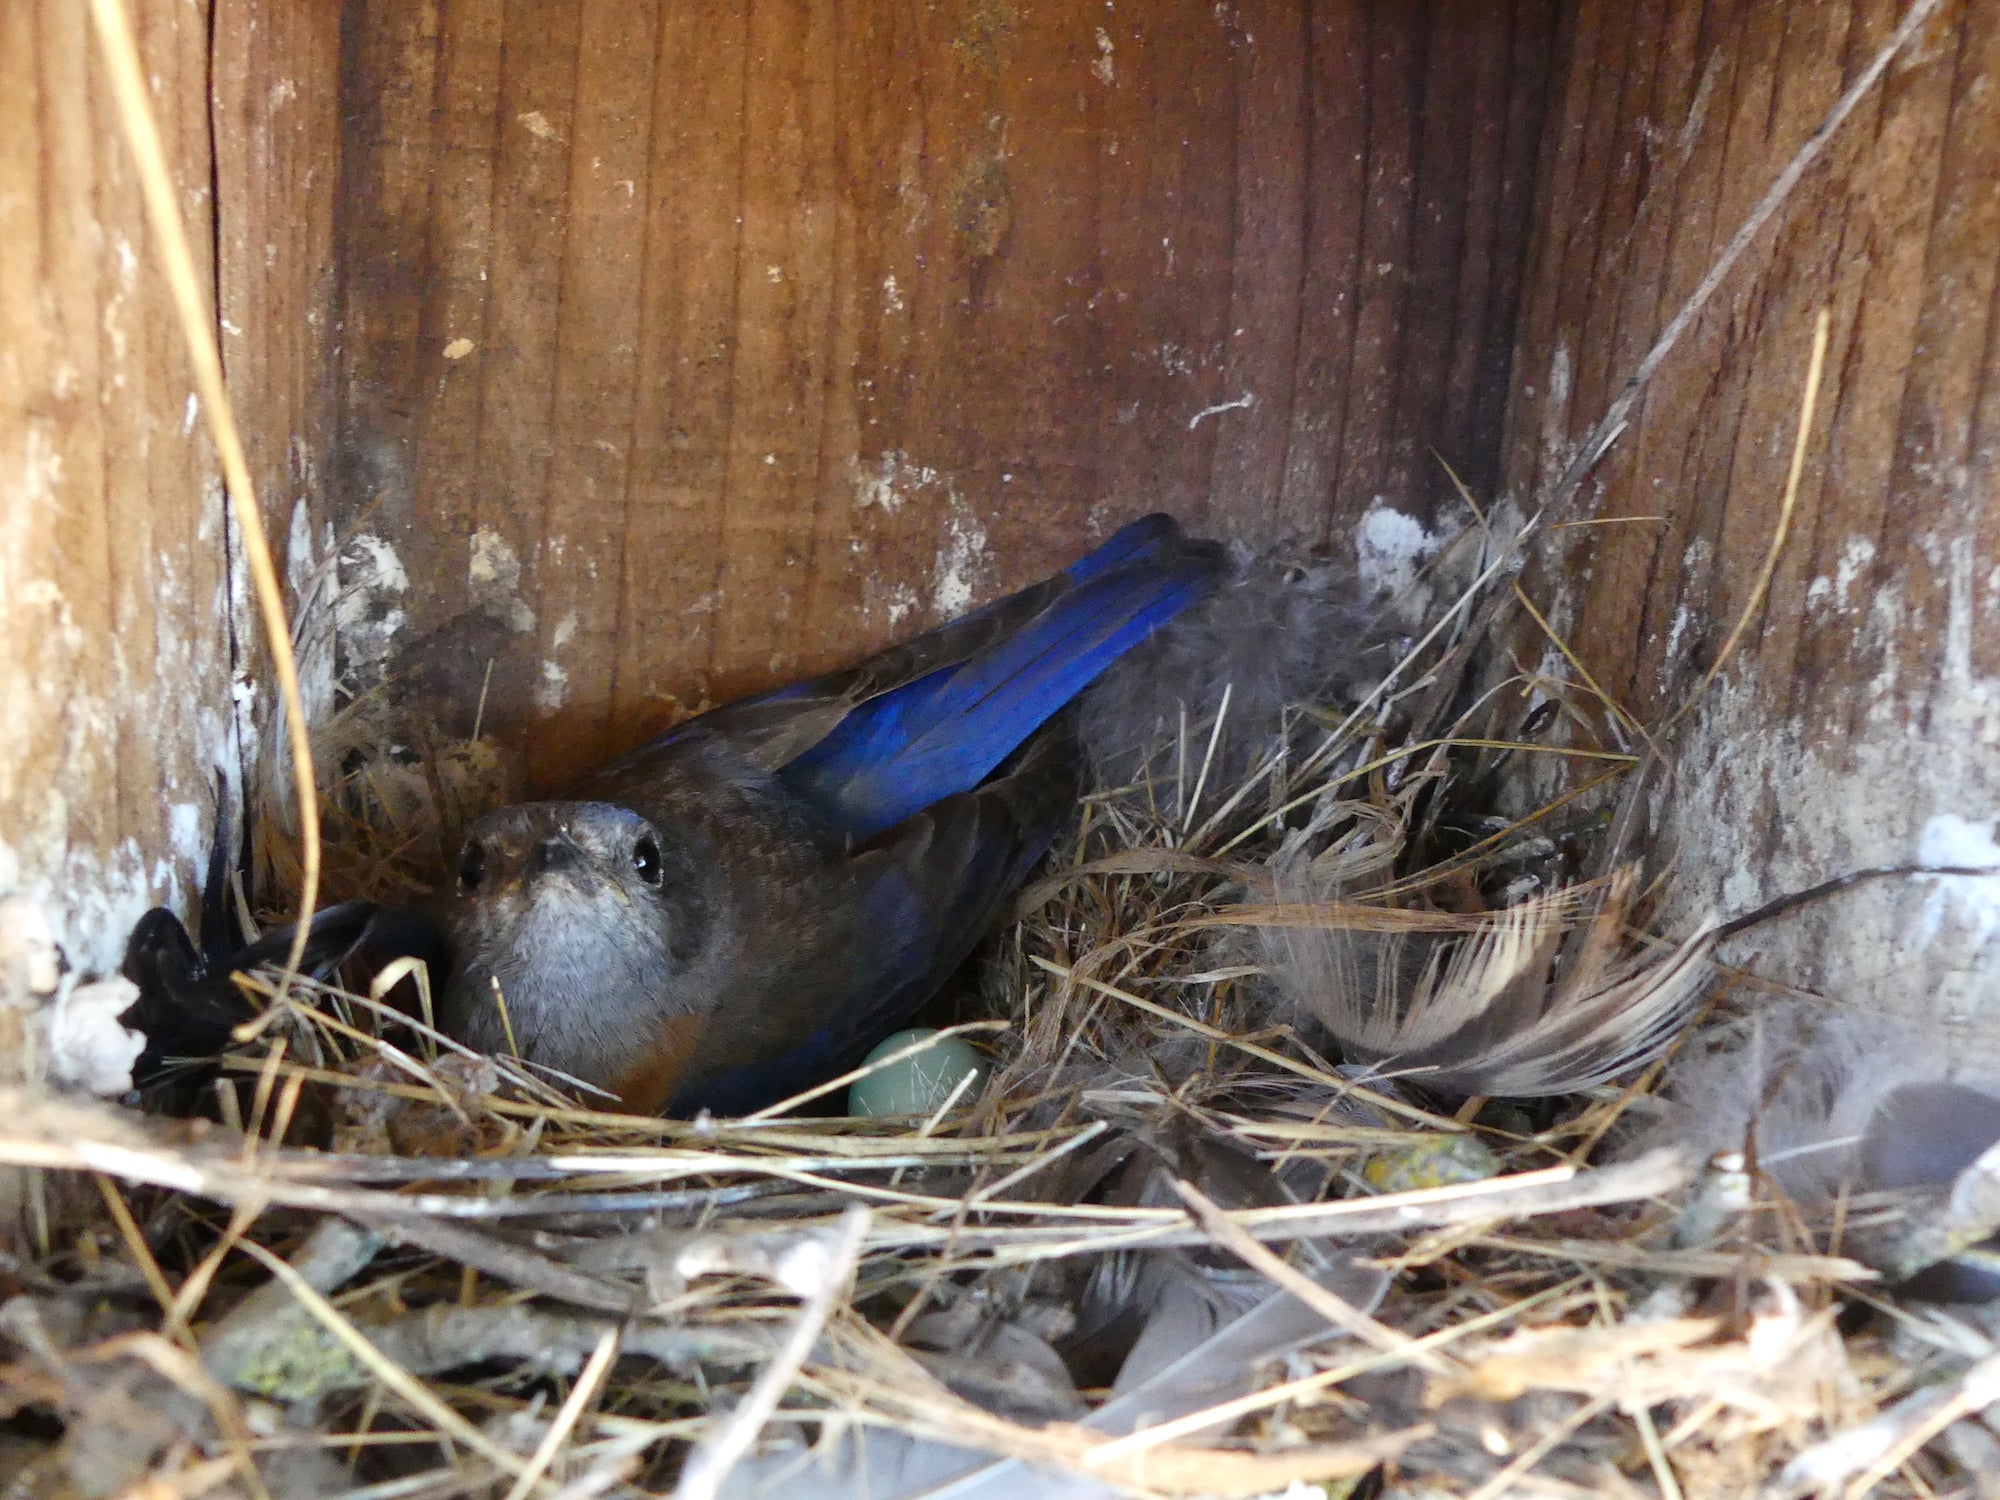 Western bluebird incubates eggs in a nestbox